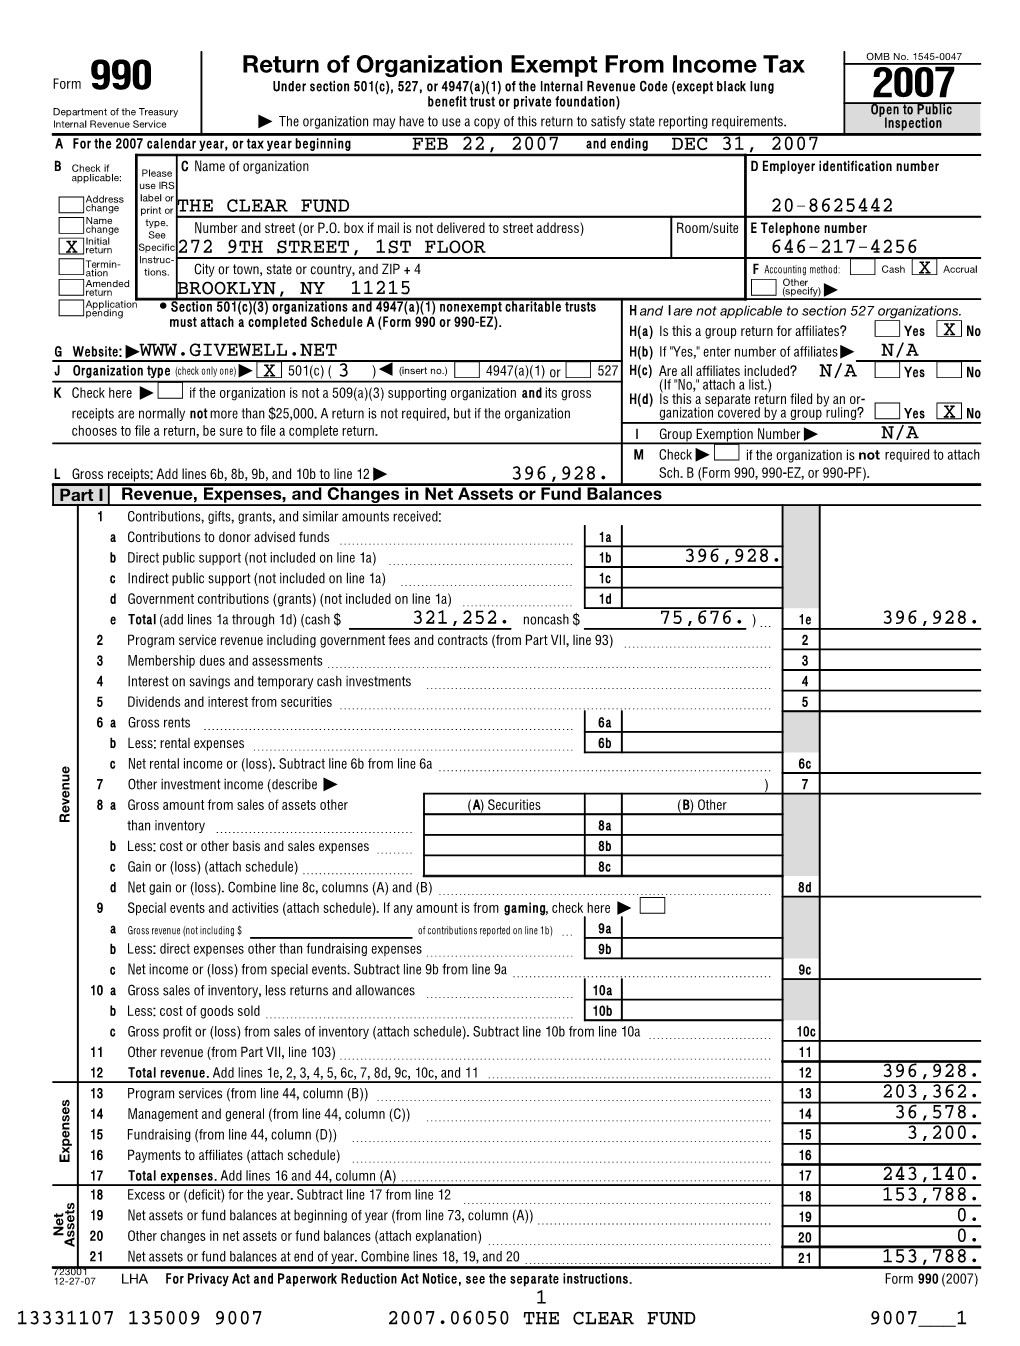 Clear Fund 2007 Tax Return (Form 990)